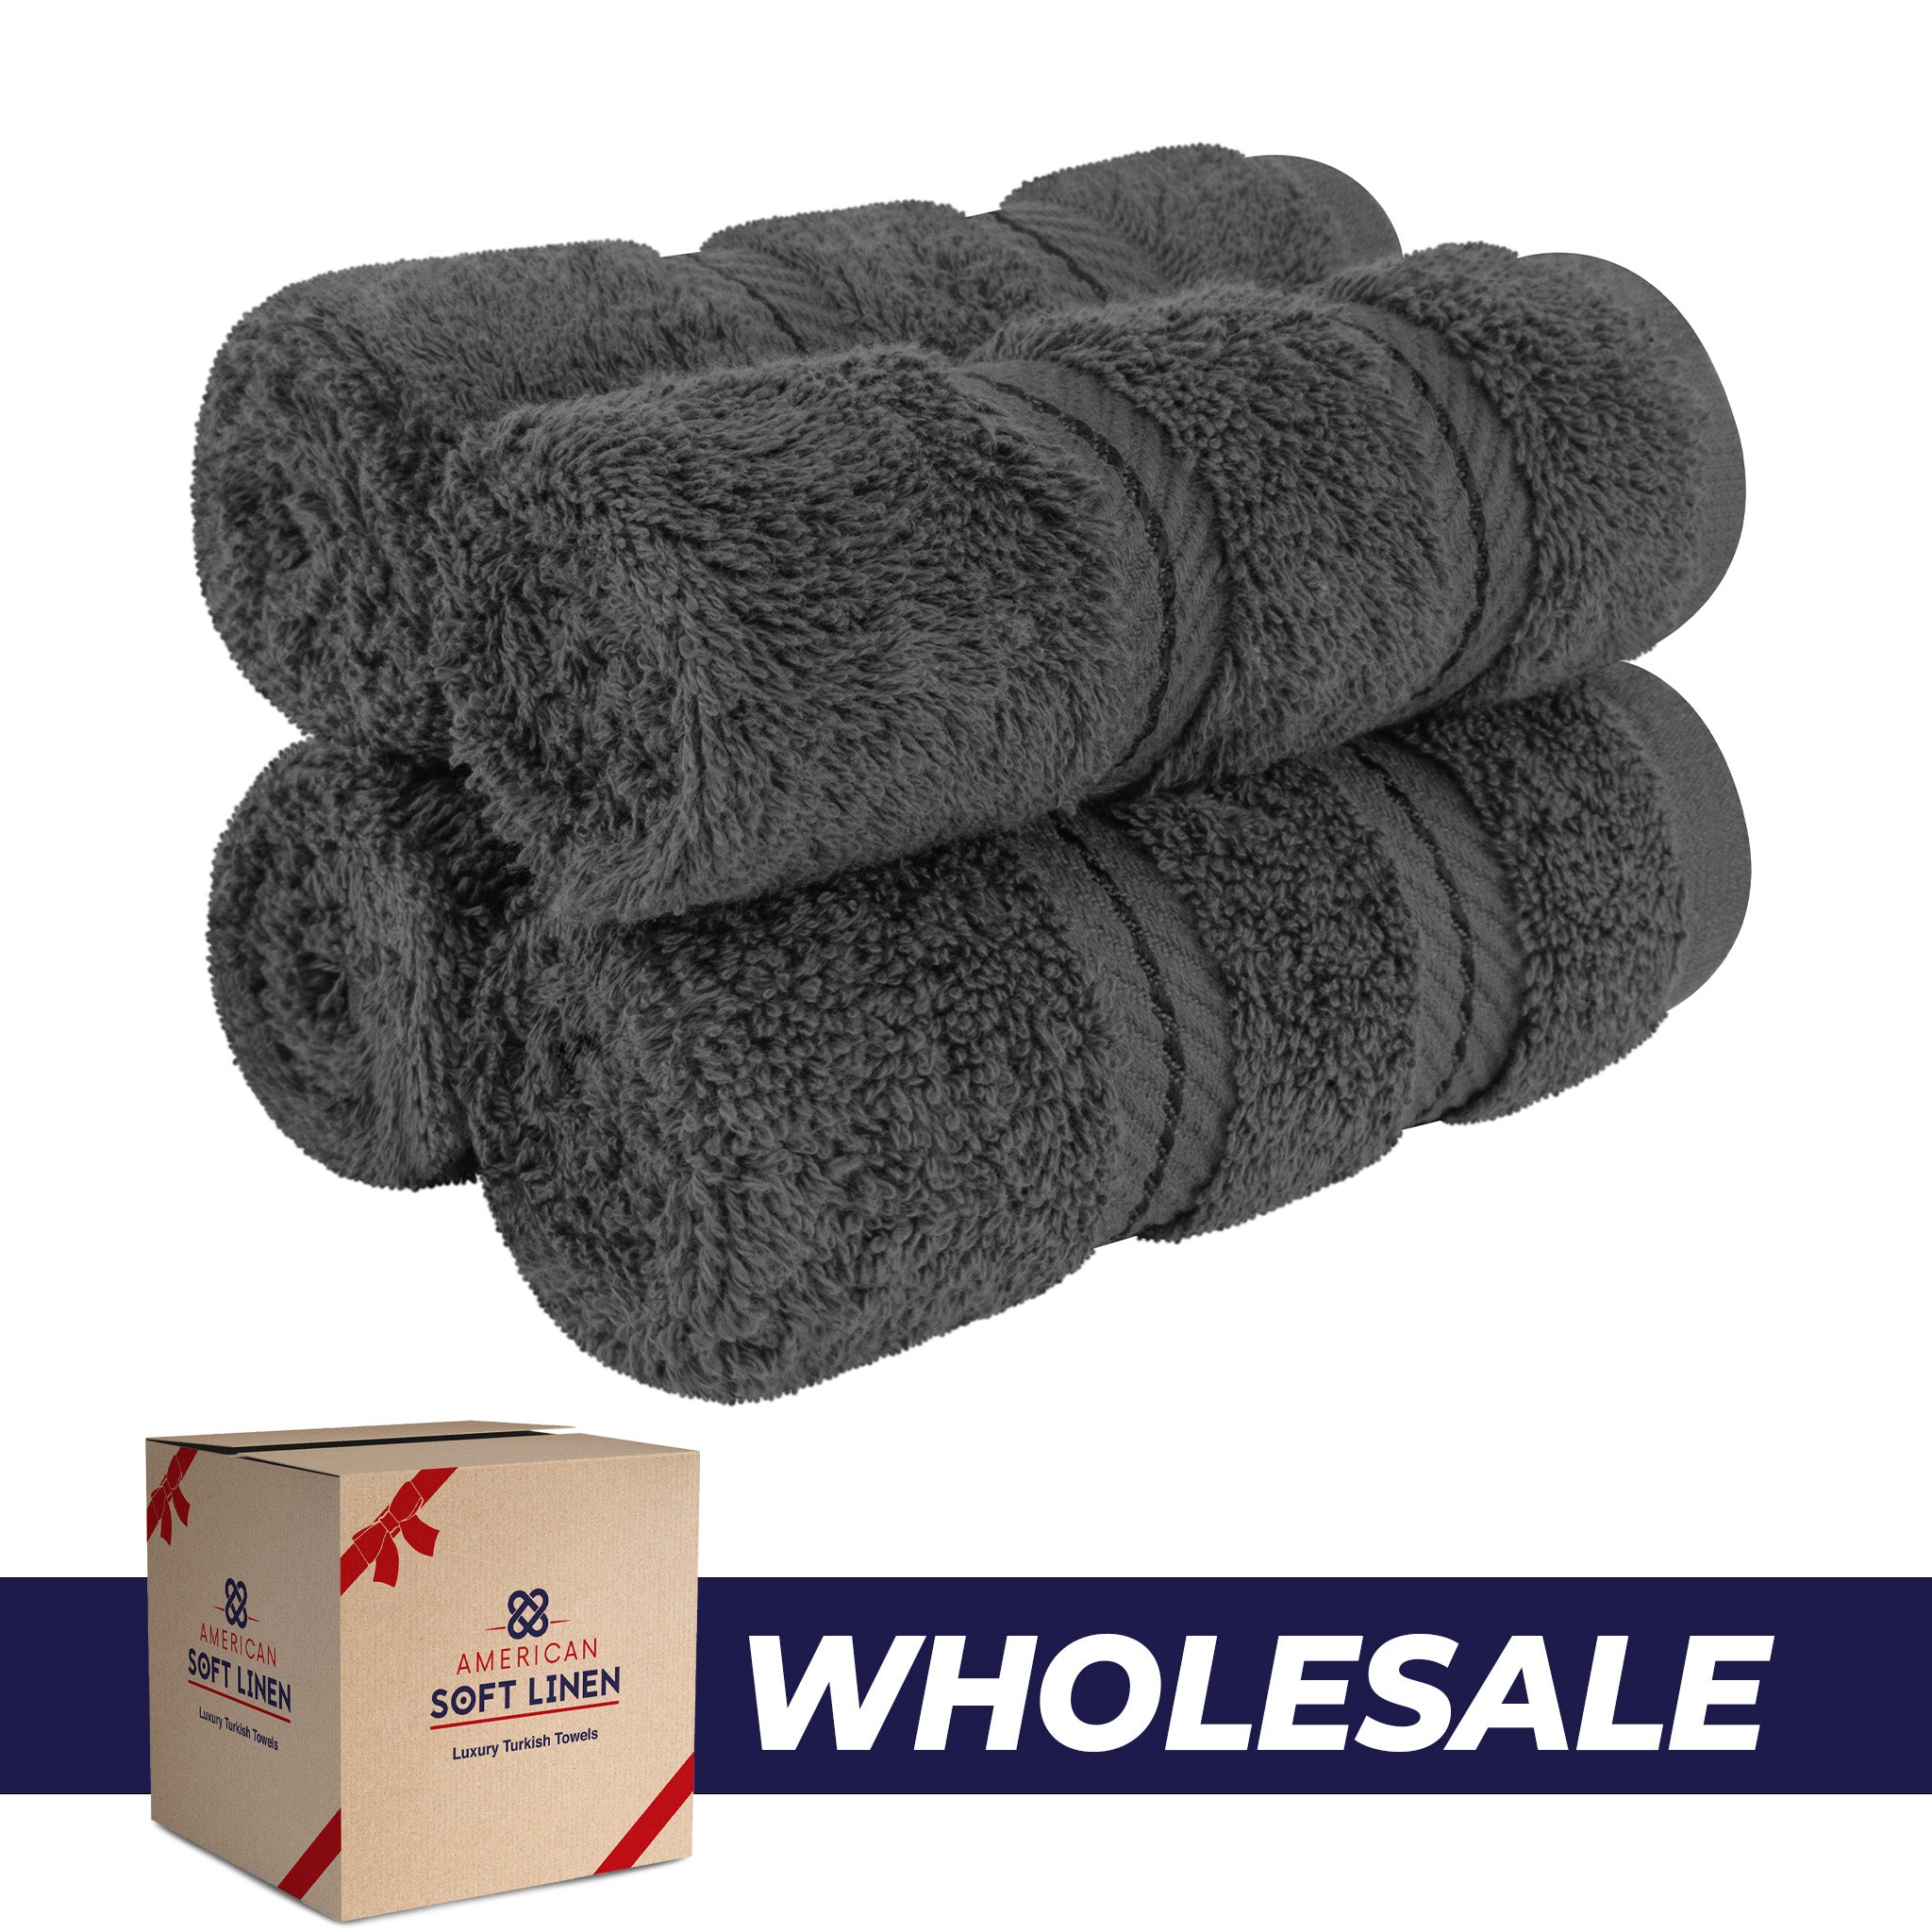  American Soft Linen 100% Turkish Cotton 4 Piece Washcloth Set - Wholesale - gray-0